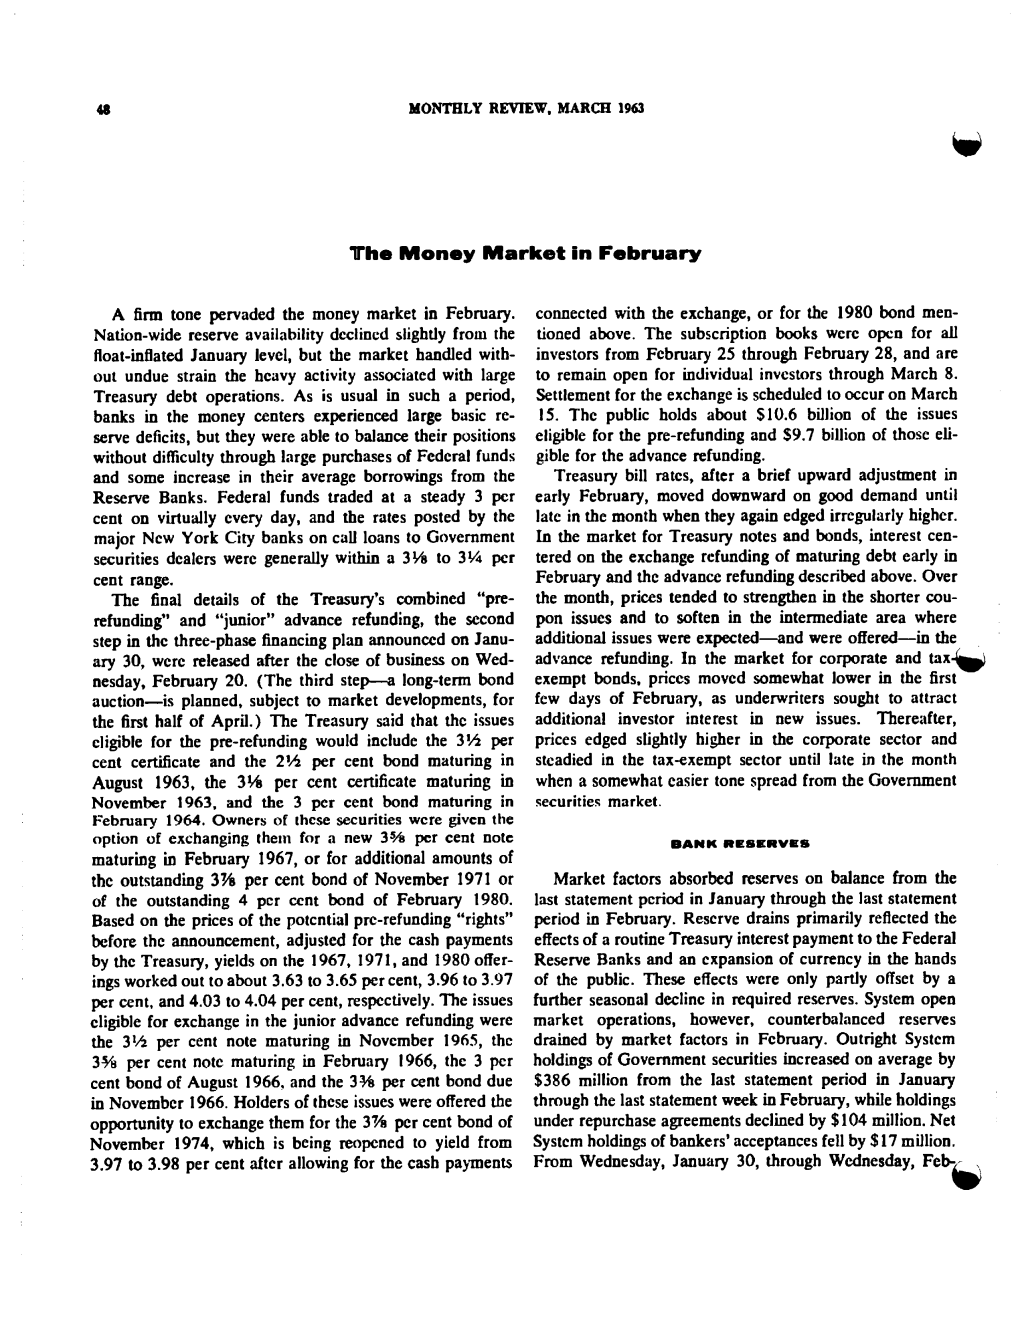 The Money Market in February 1963